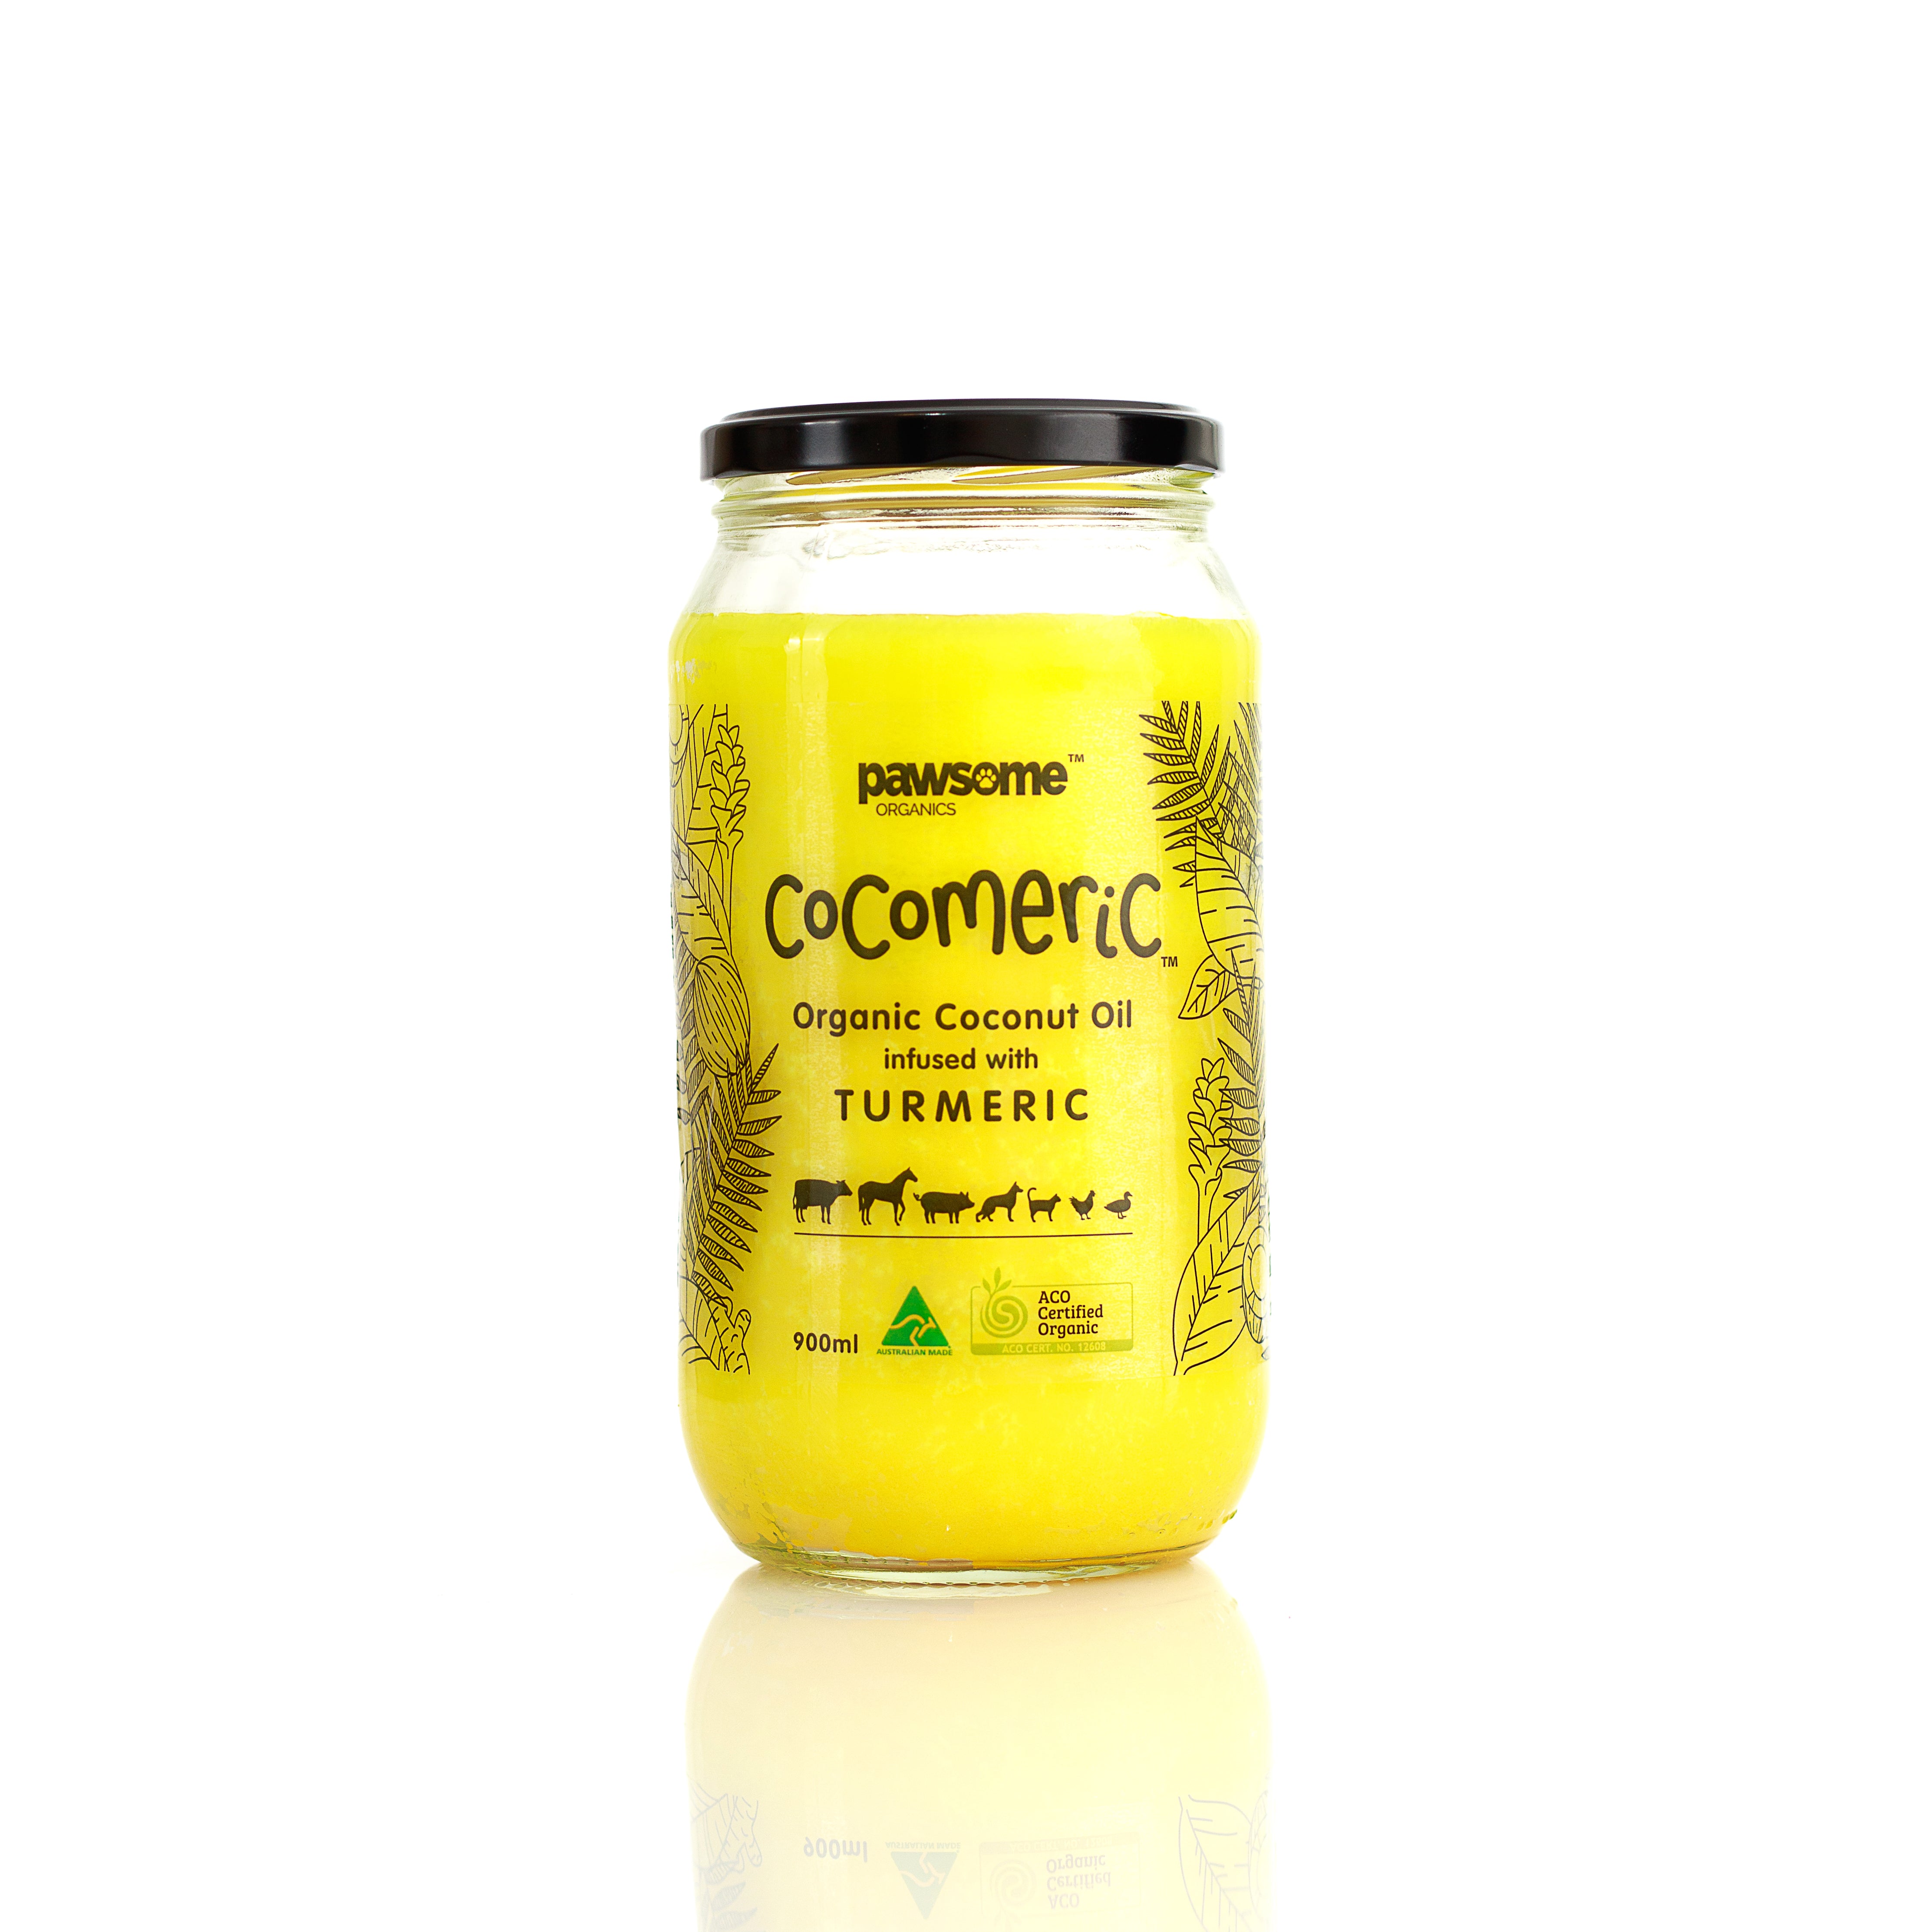 Pawsome Organics Cocomeric